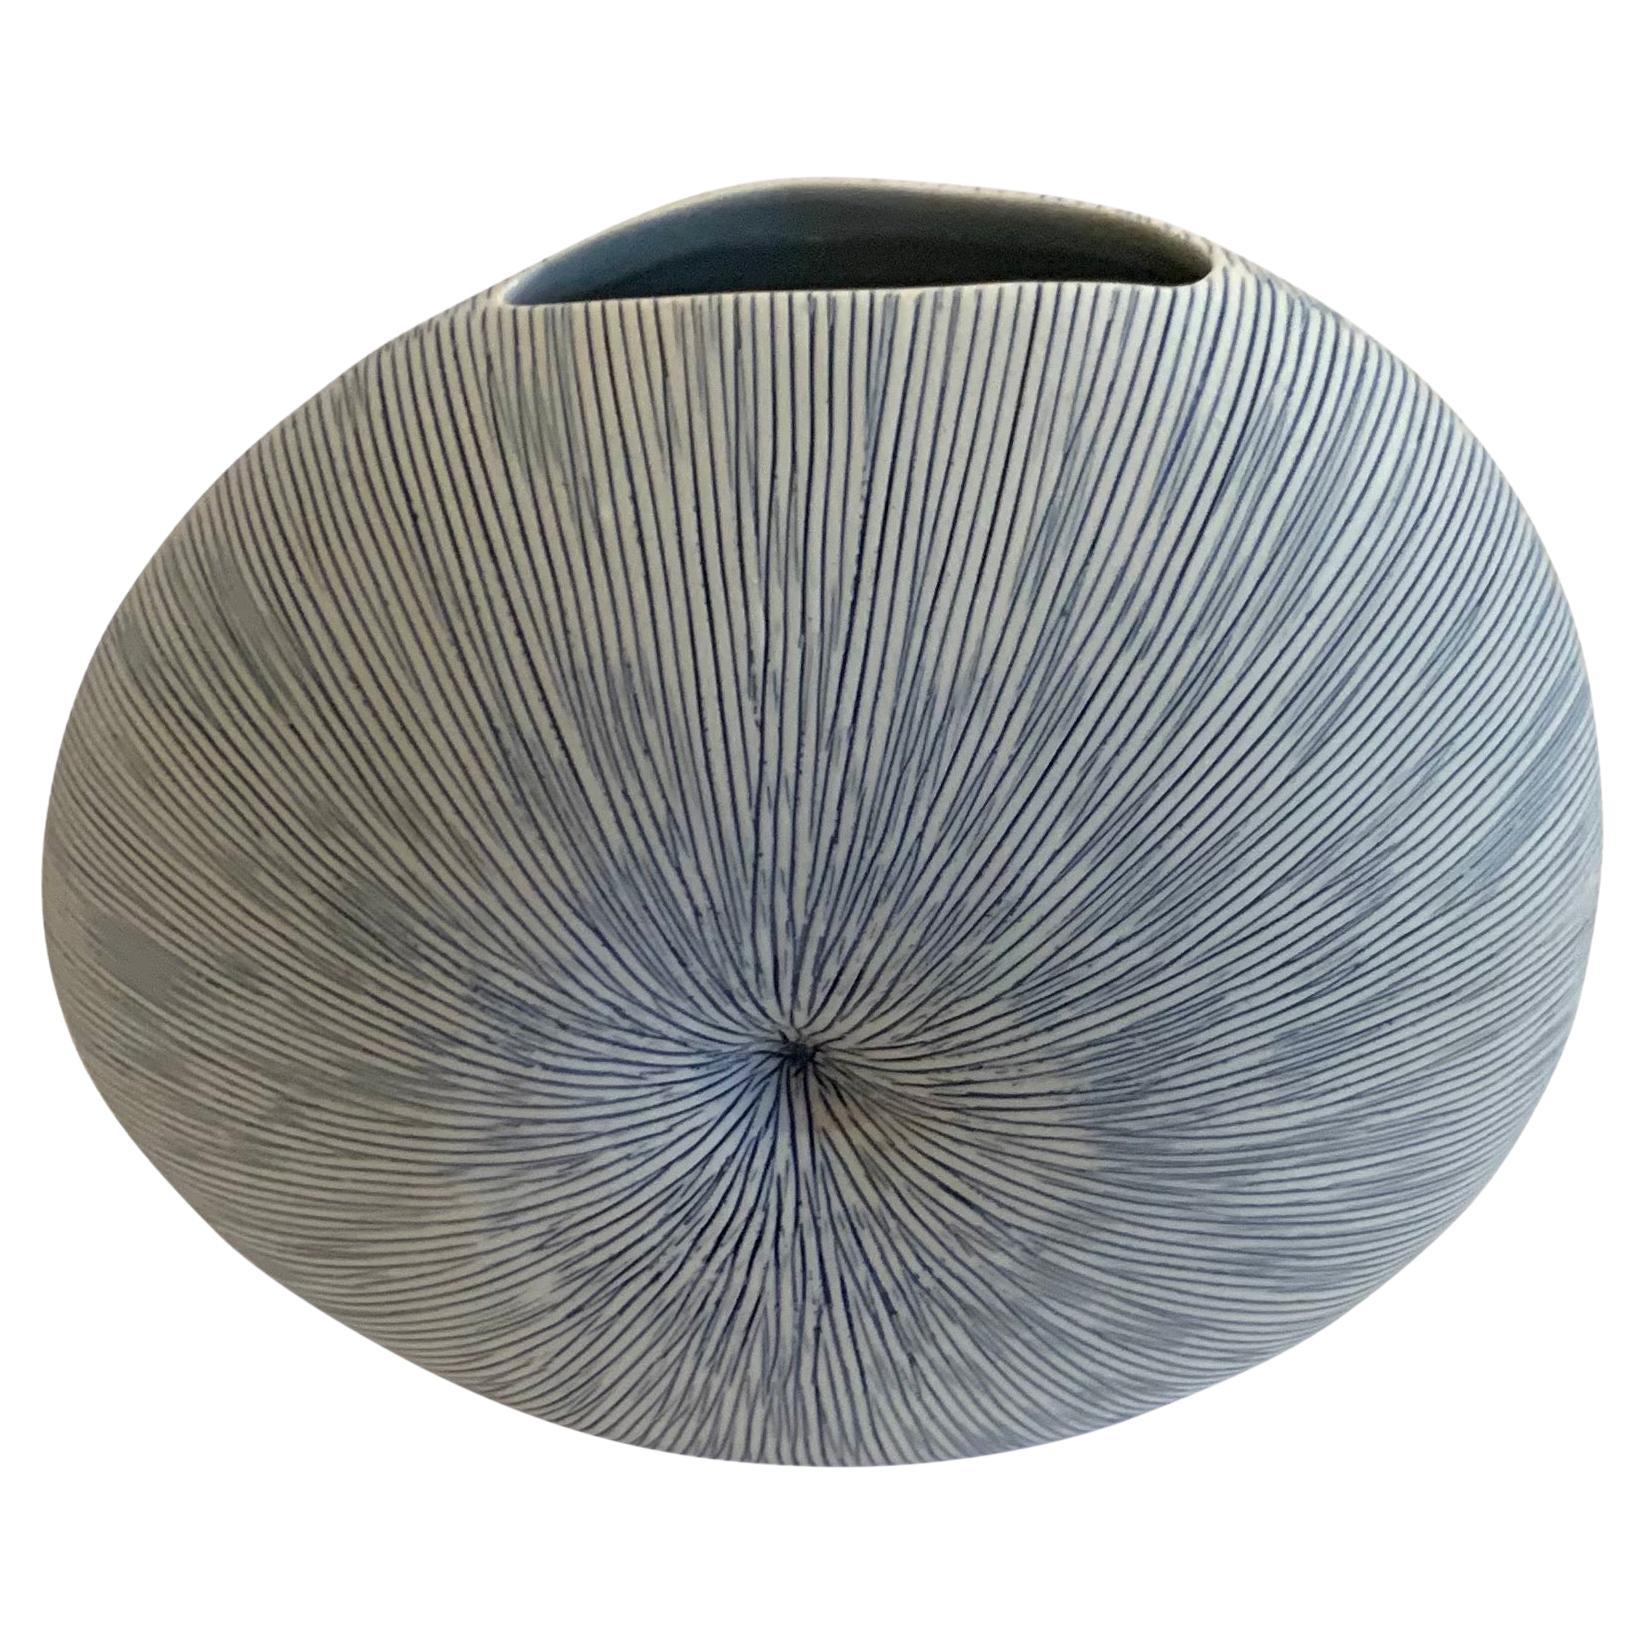 White and Blue Thin Stripe Starburst Design Vase, Thailand, Contemporary